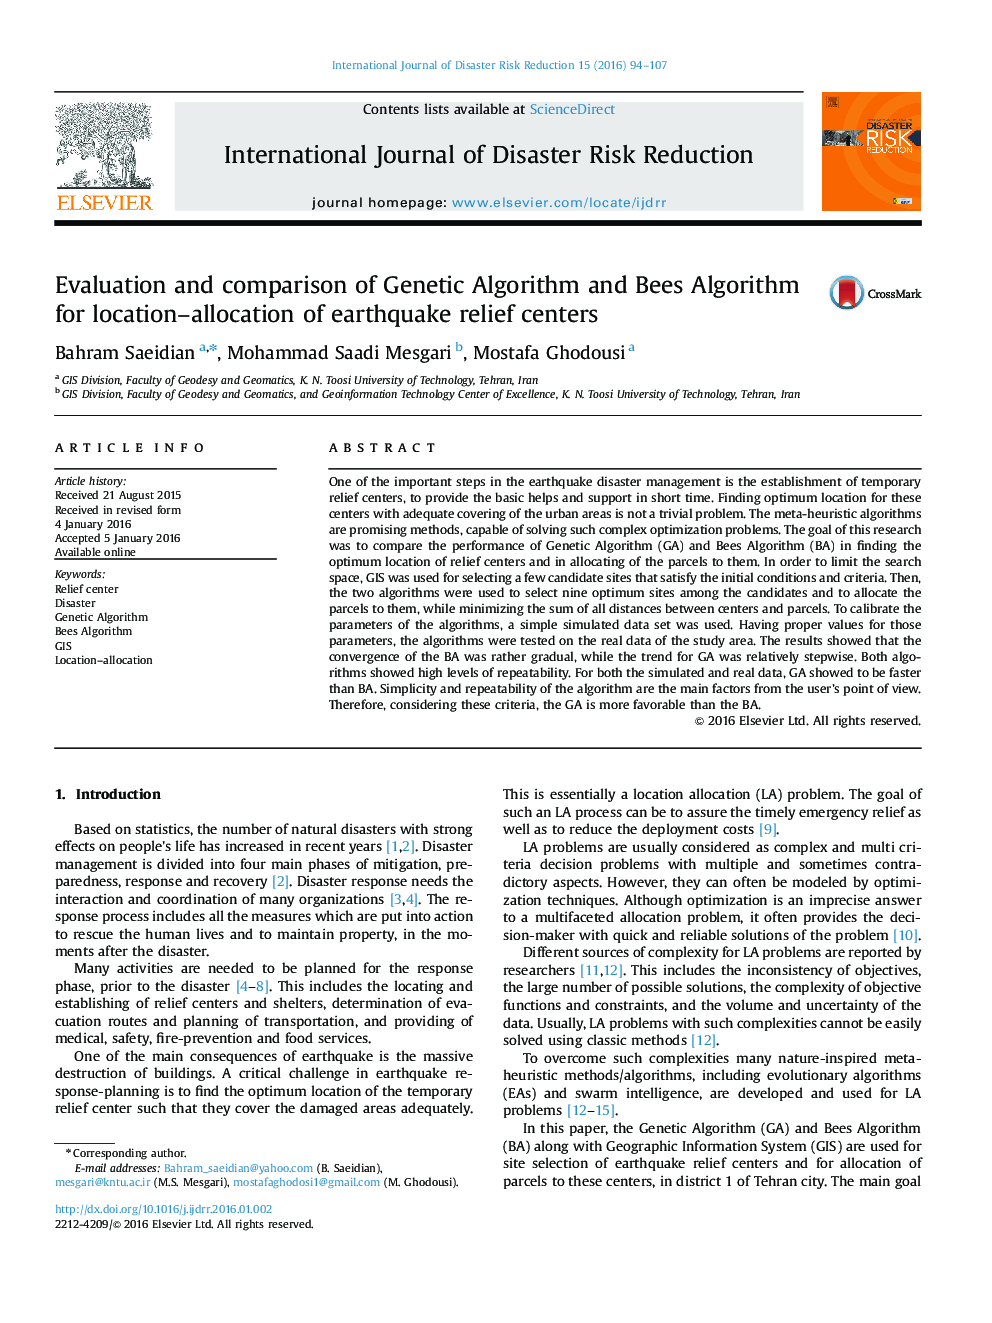 Evaluation and comparison of Genetic Algorithm and Bees Algorithm for location-allocation of earthquake relief centers